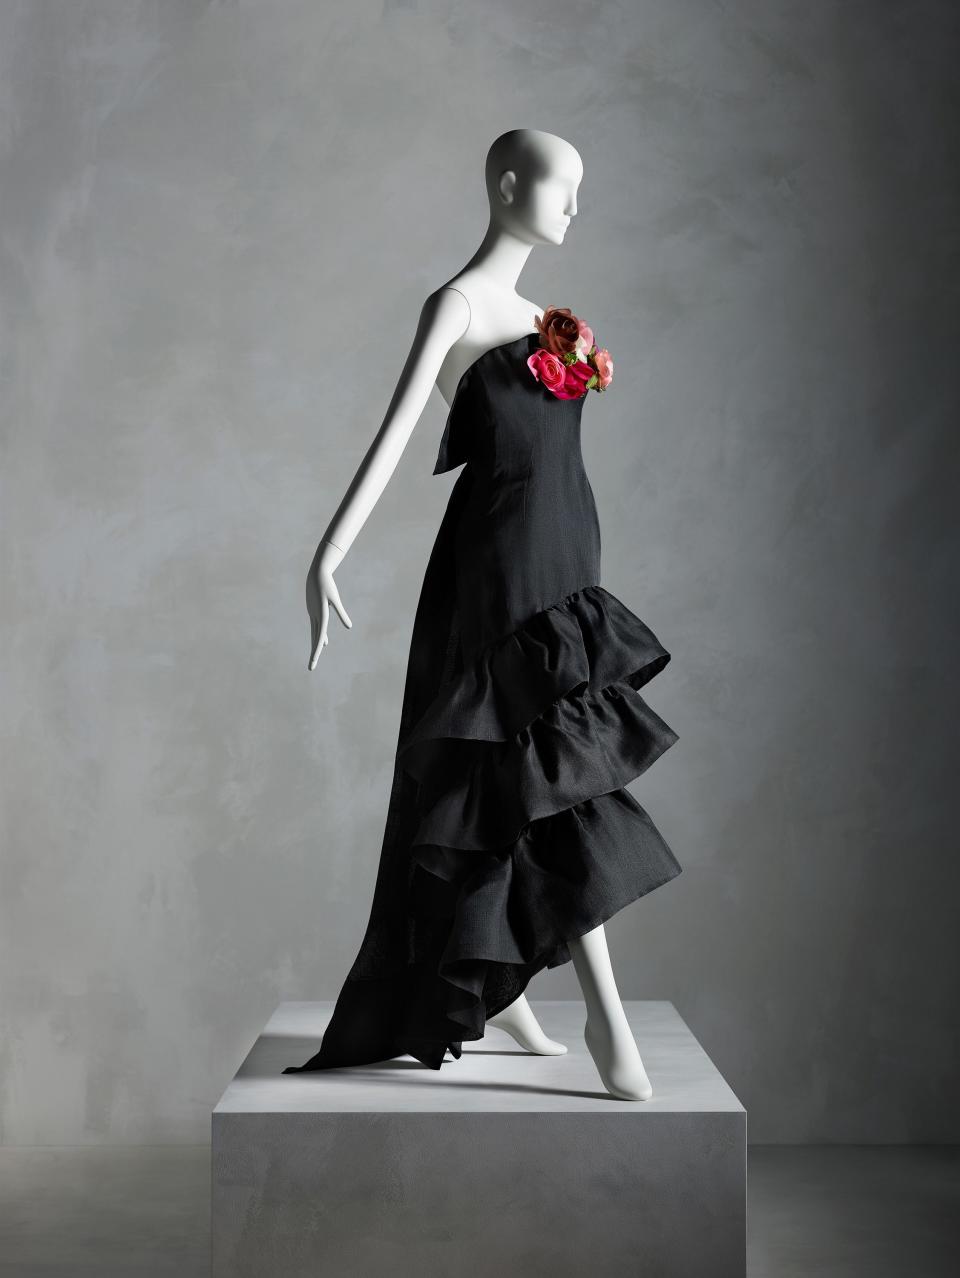 Evening Dress, Cristóbal Balenciaga (Spanish, 1895 – 1972) for House of Balenciaga (French, founded 1937), summer 1961; Promised gift of Sandy Schreier.